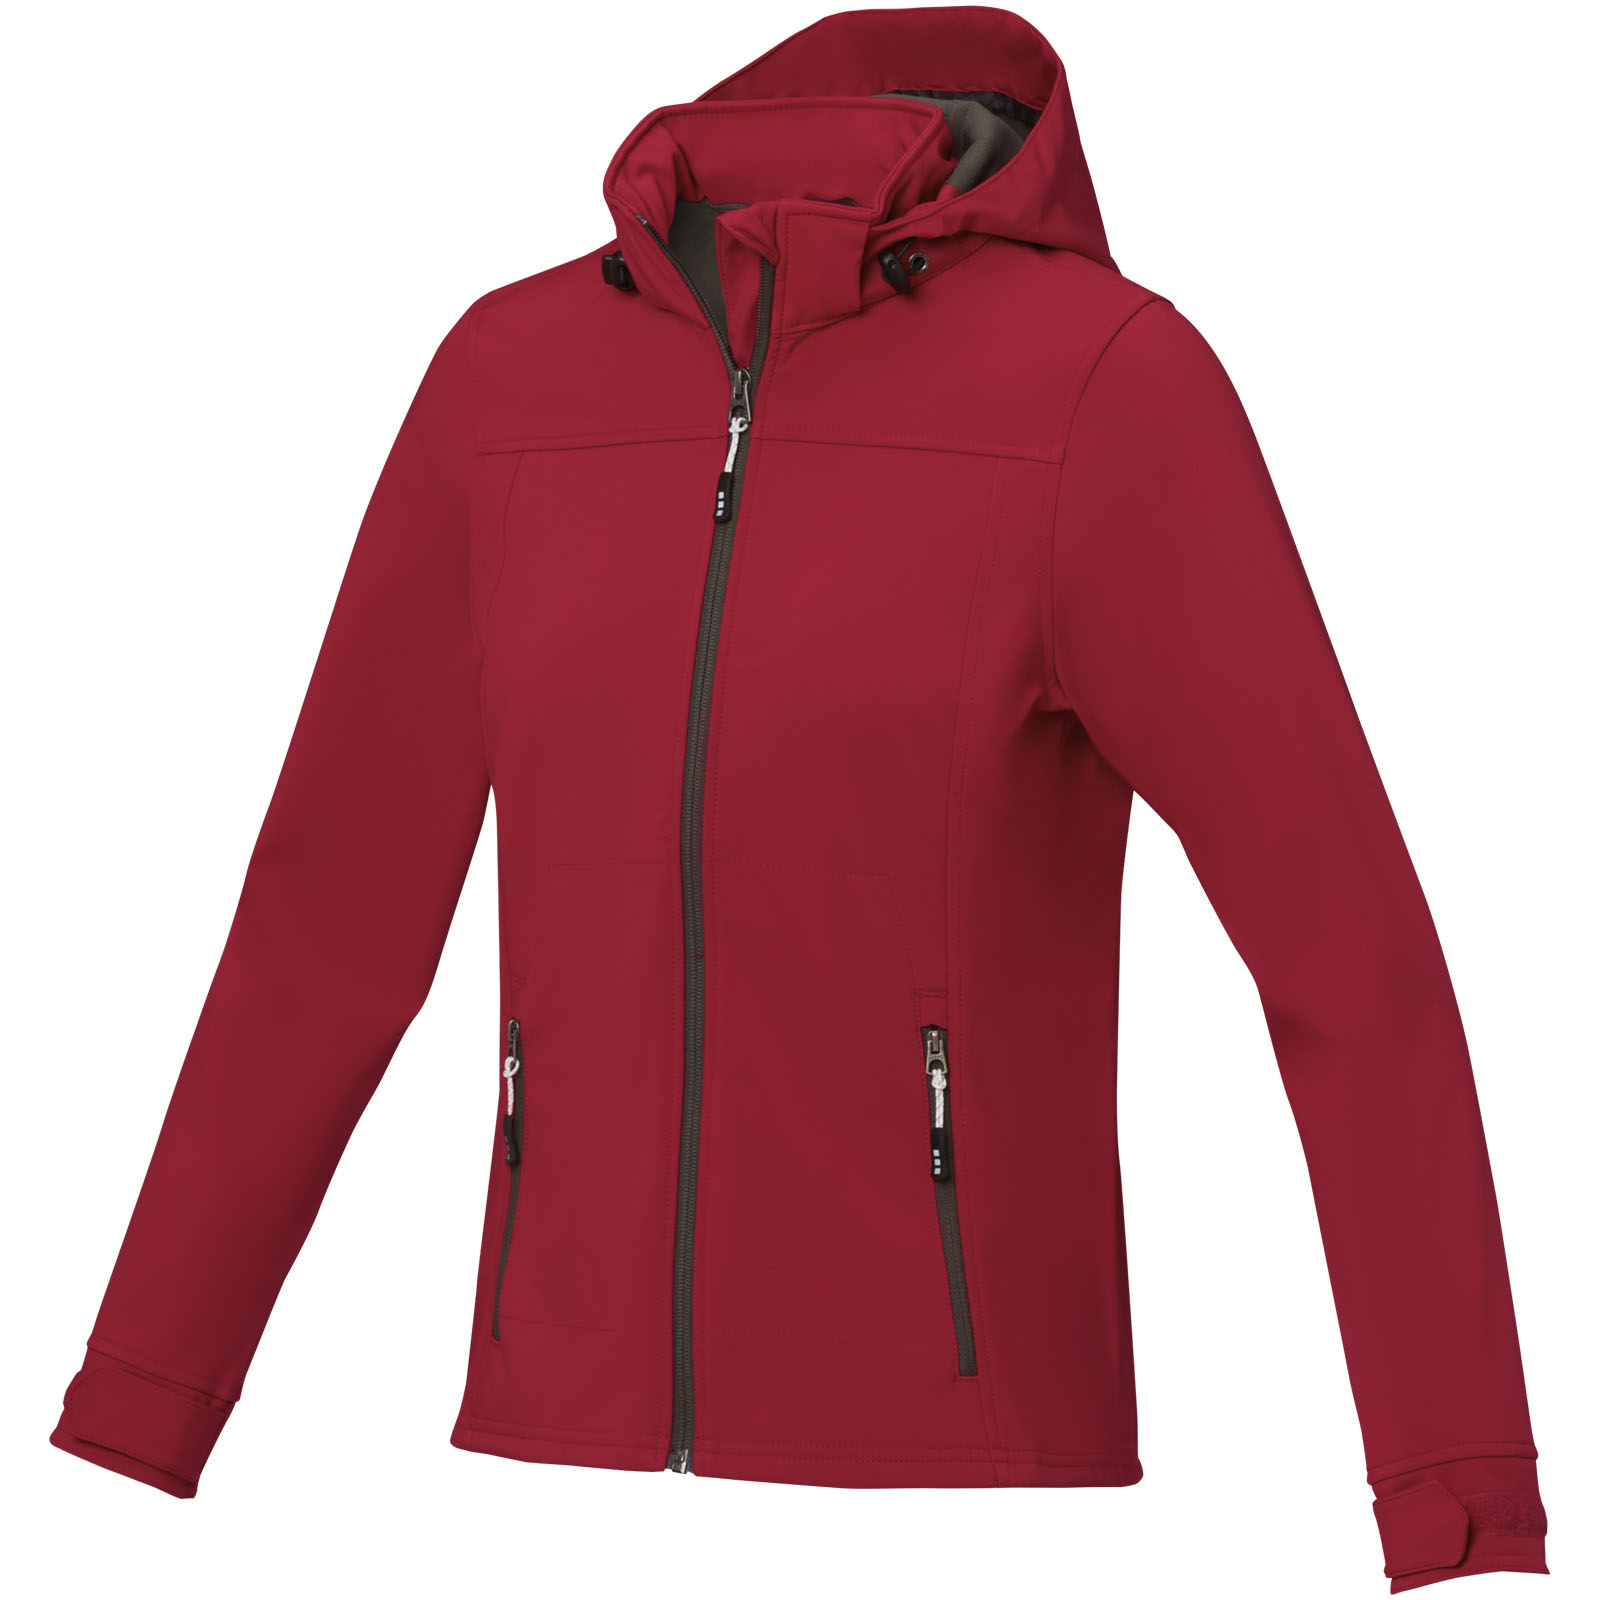 Advertising Jackets - Langley women's softshell jacket - 0